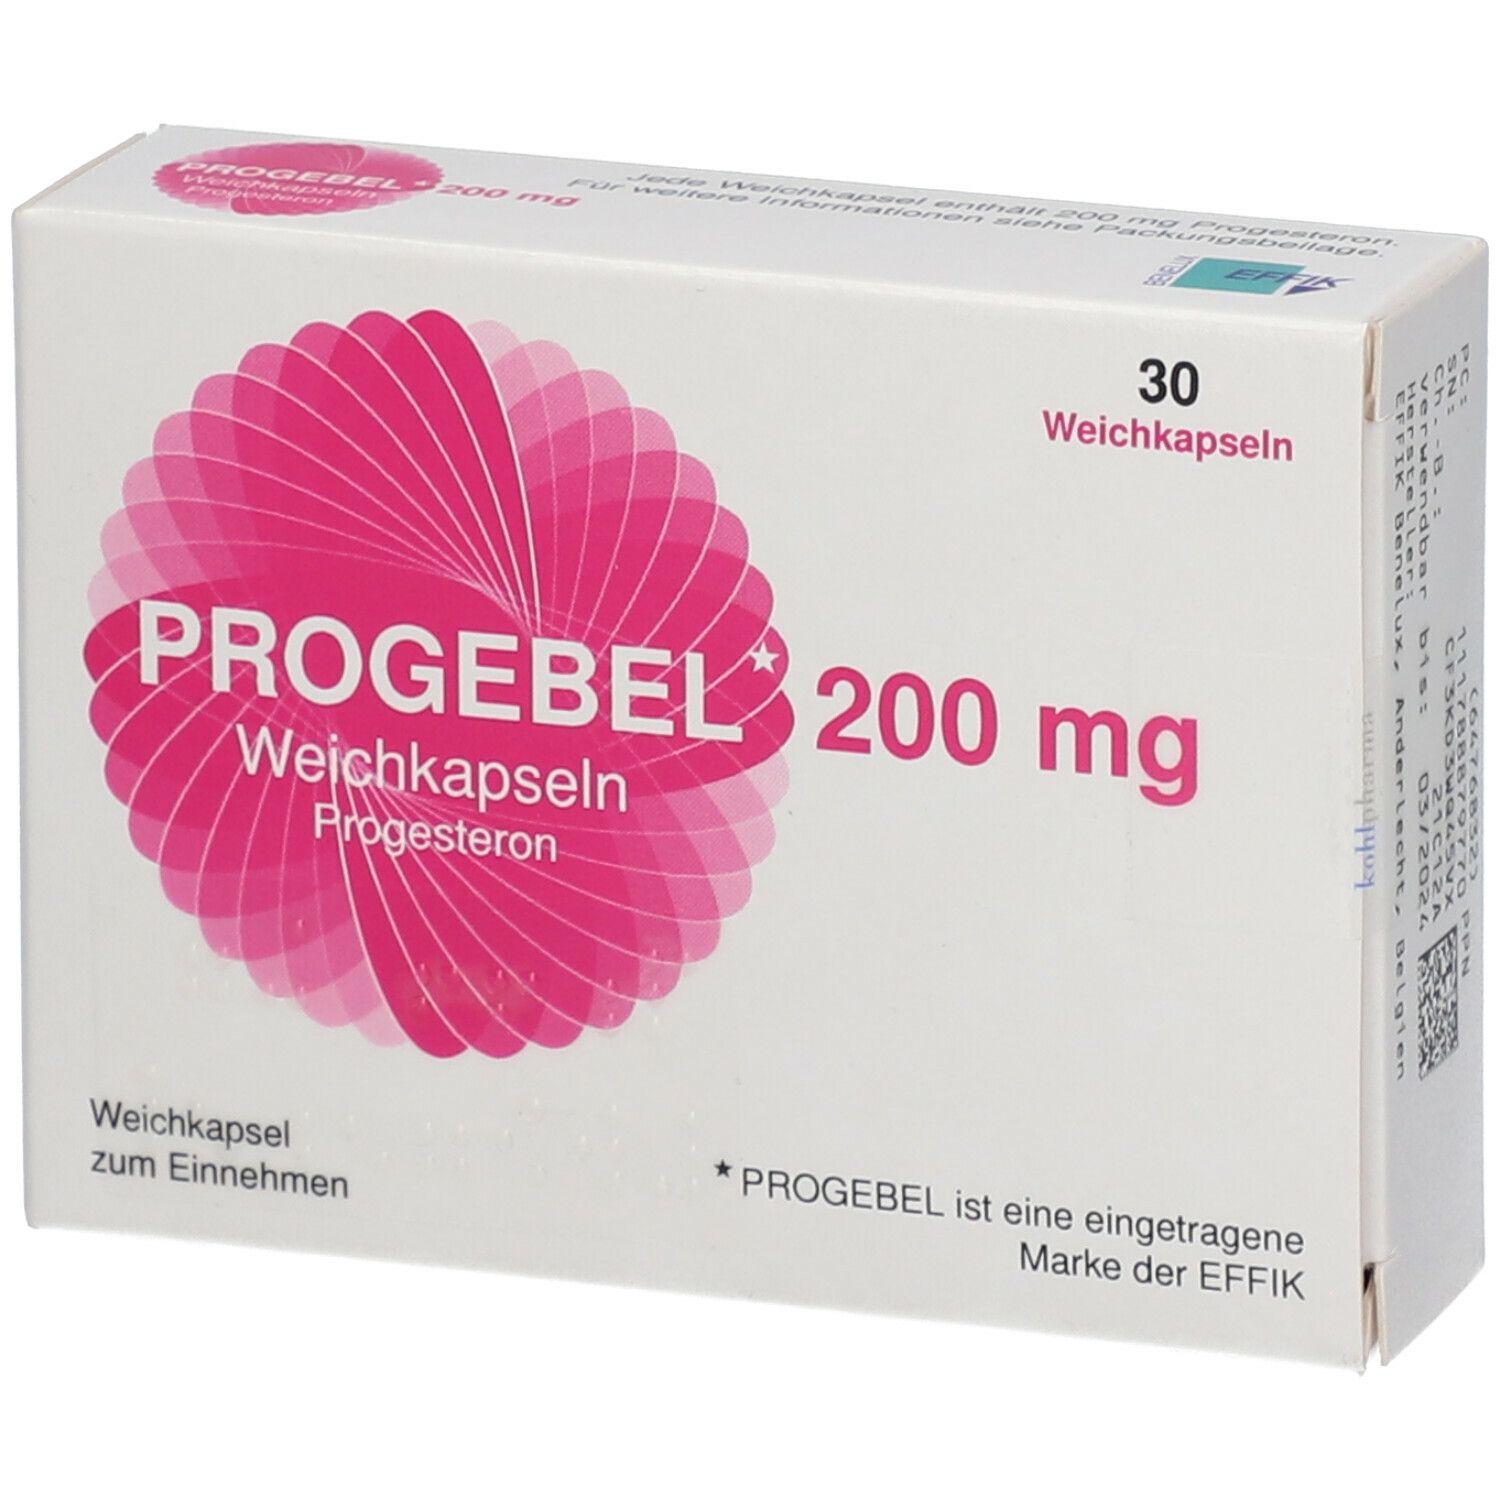 PROGEBEL 200 mg Weichkapseln